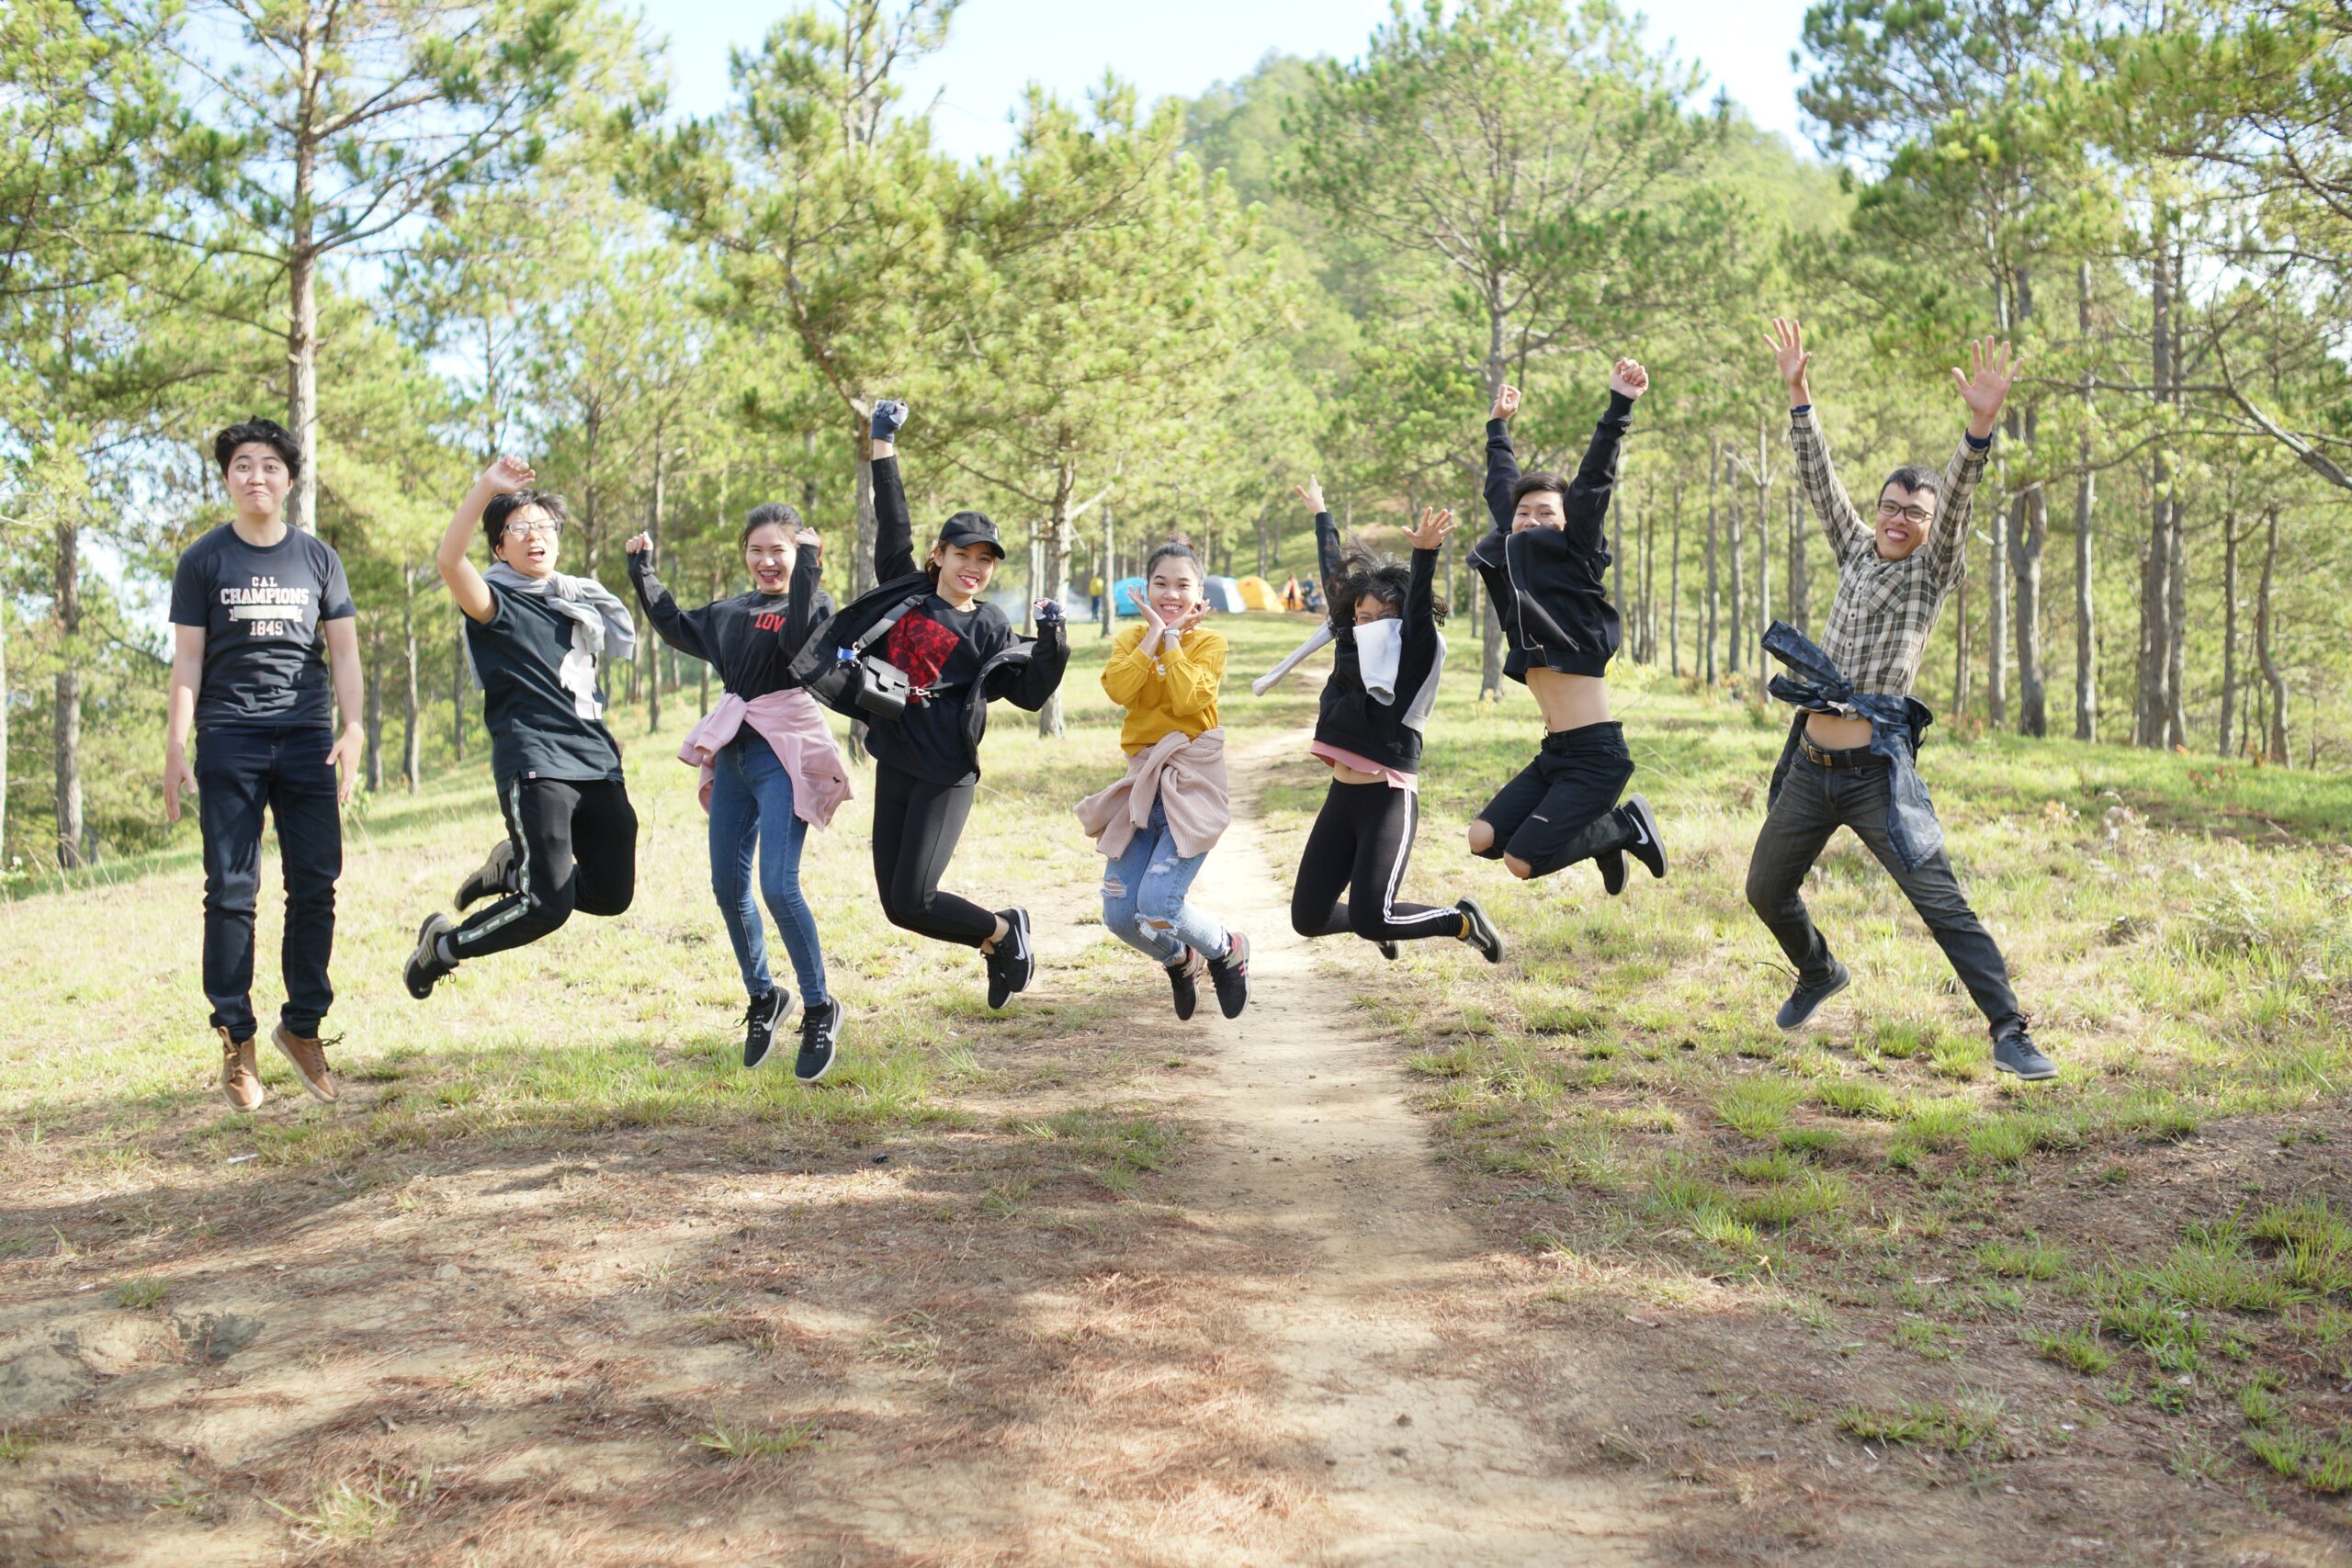 School kids jumping from joy